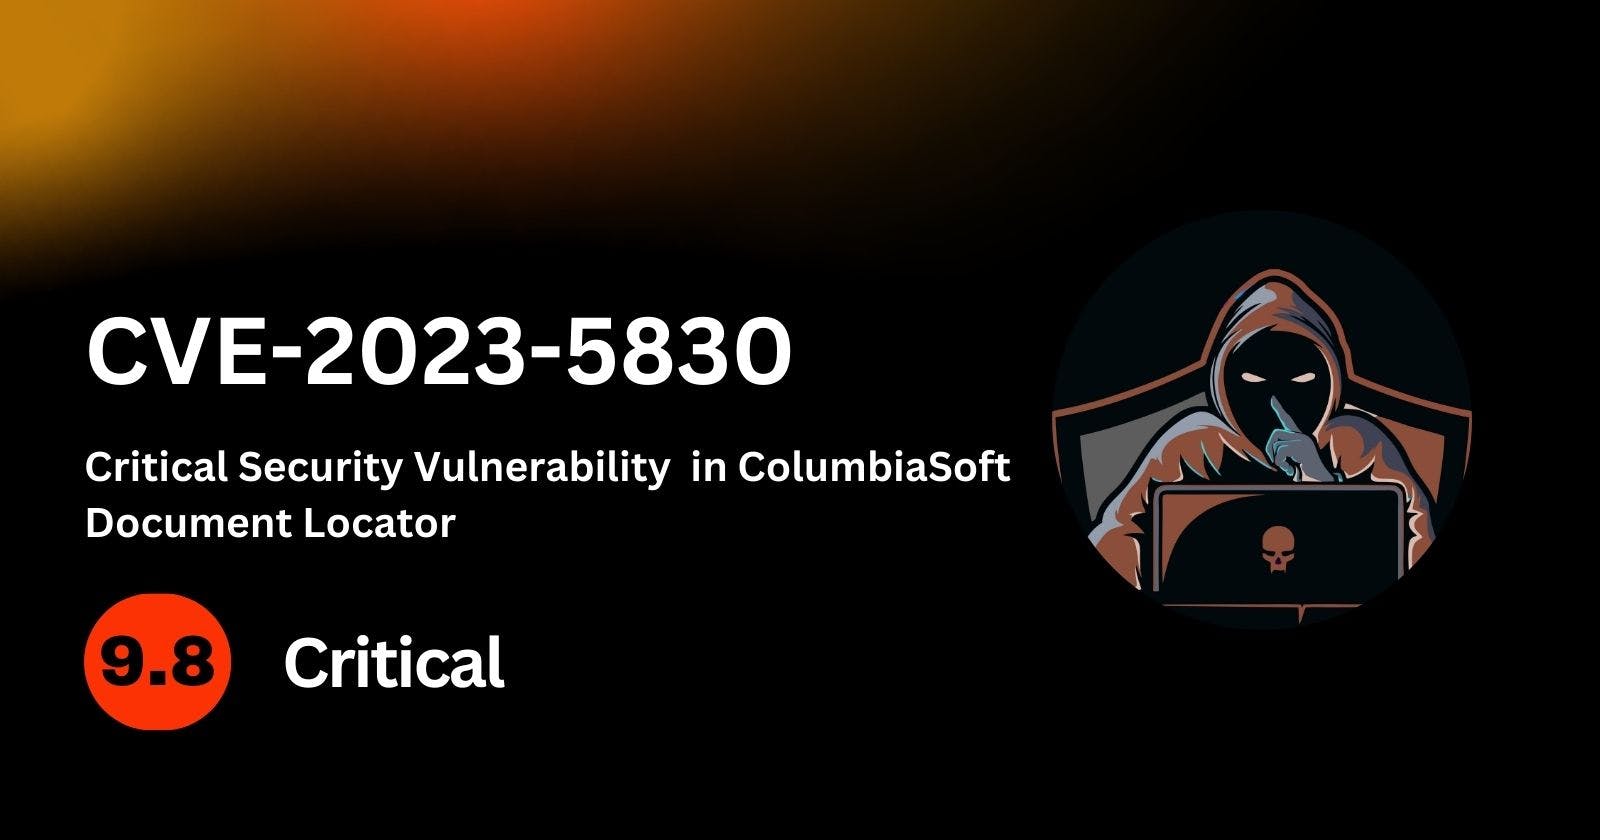 CVE-2023-5830: Critical Security Vulnerability  in ColumbiaSoft Document Locator